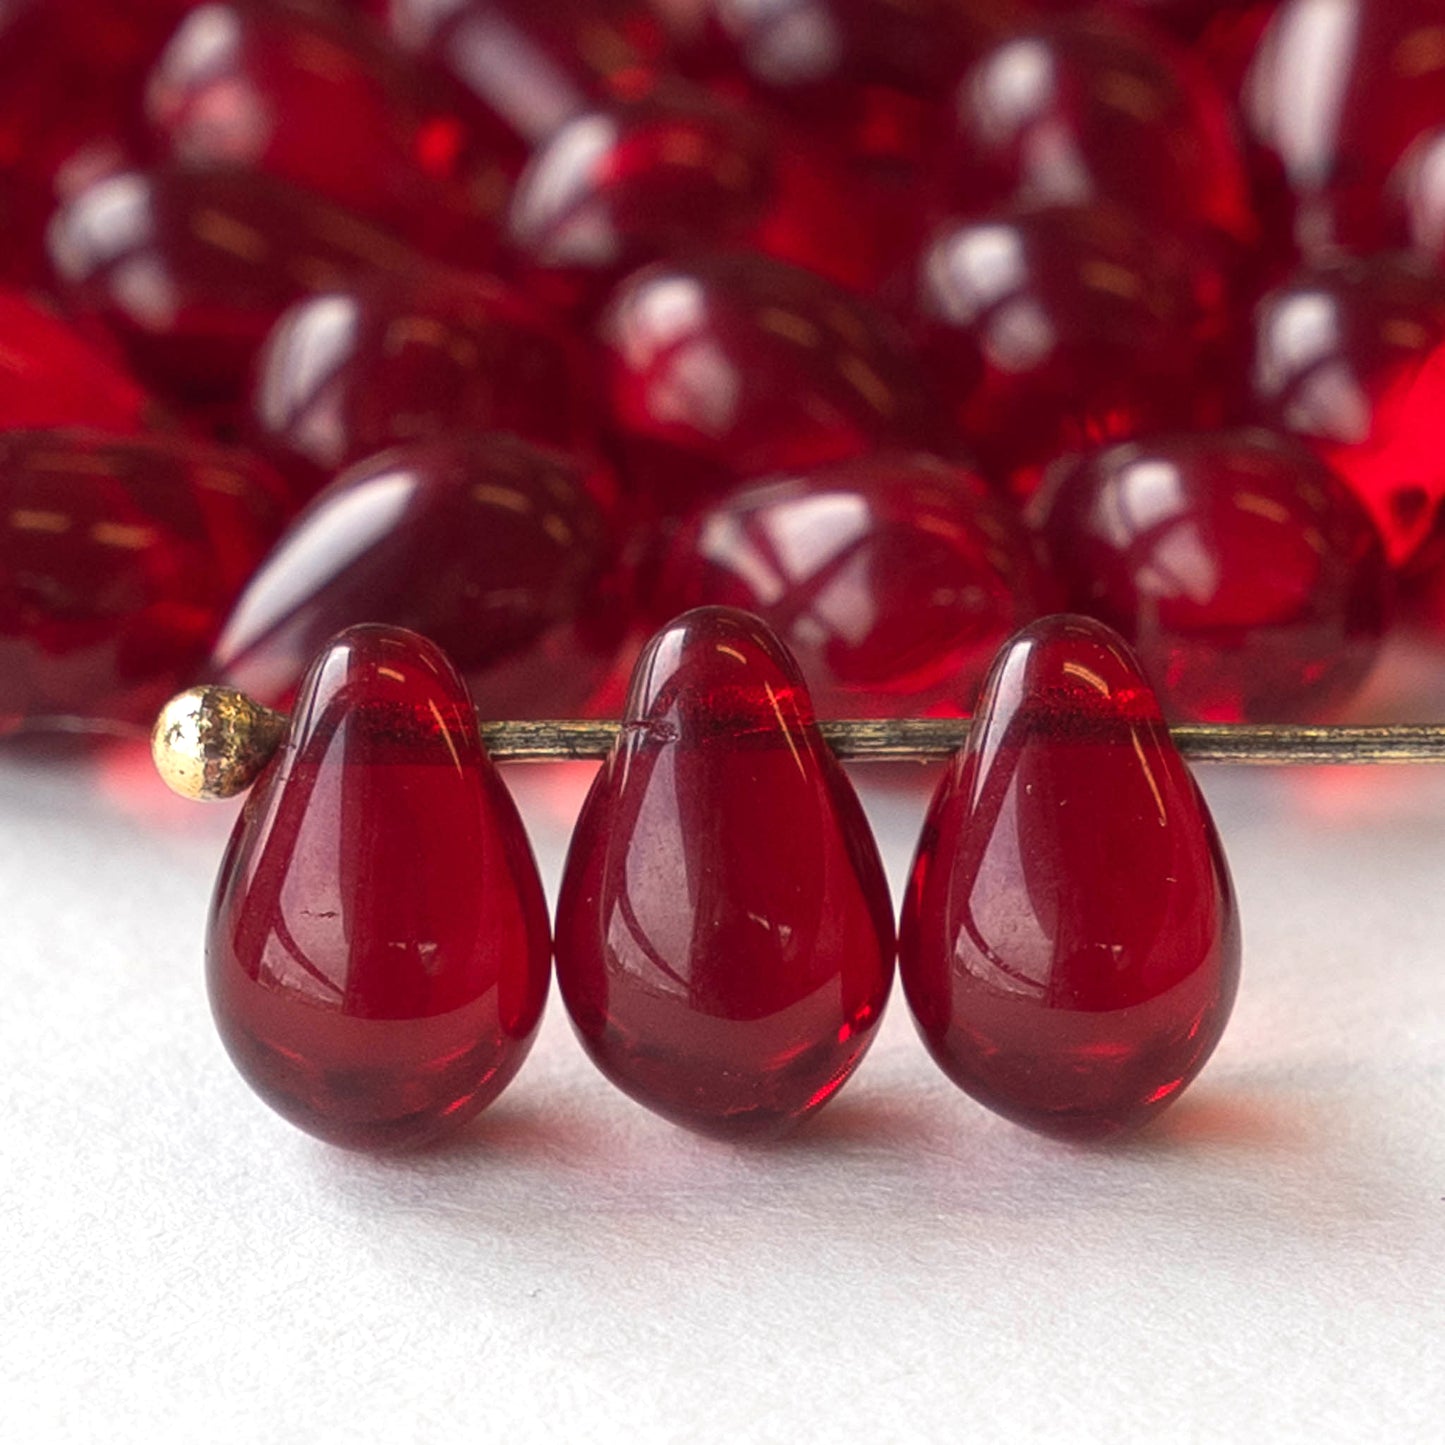 6x9mm Glass Teardrop Beads - Transparent Dark Red - 50 Beads